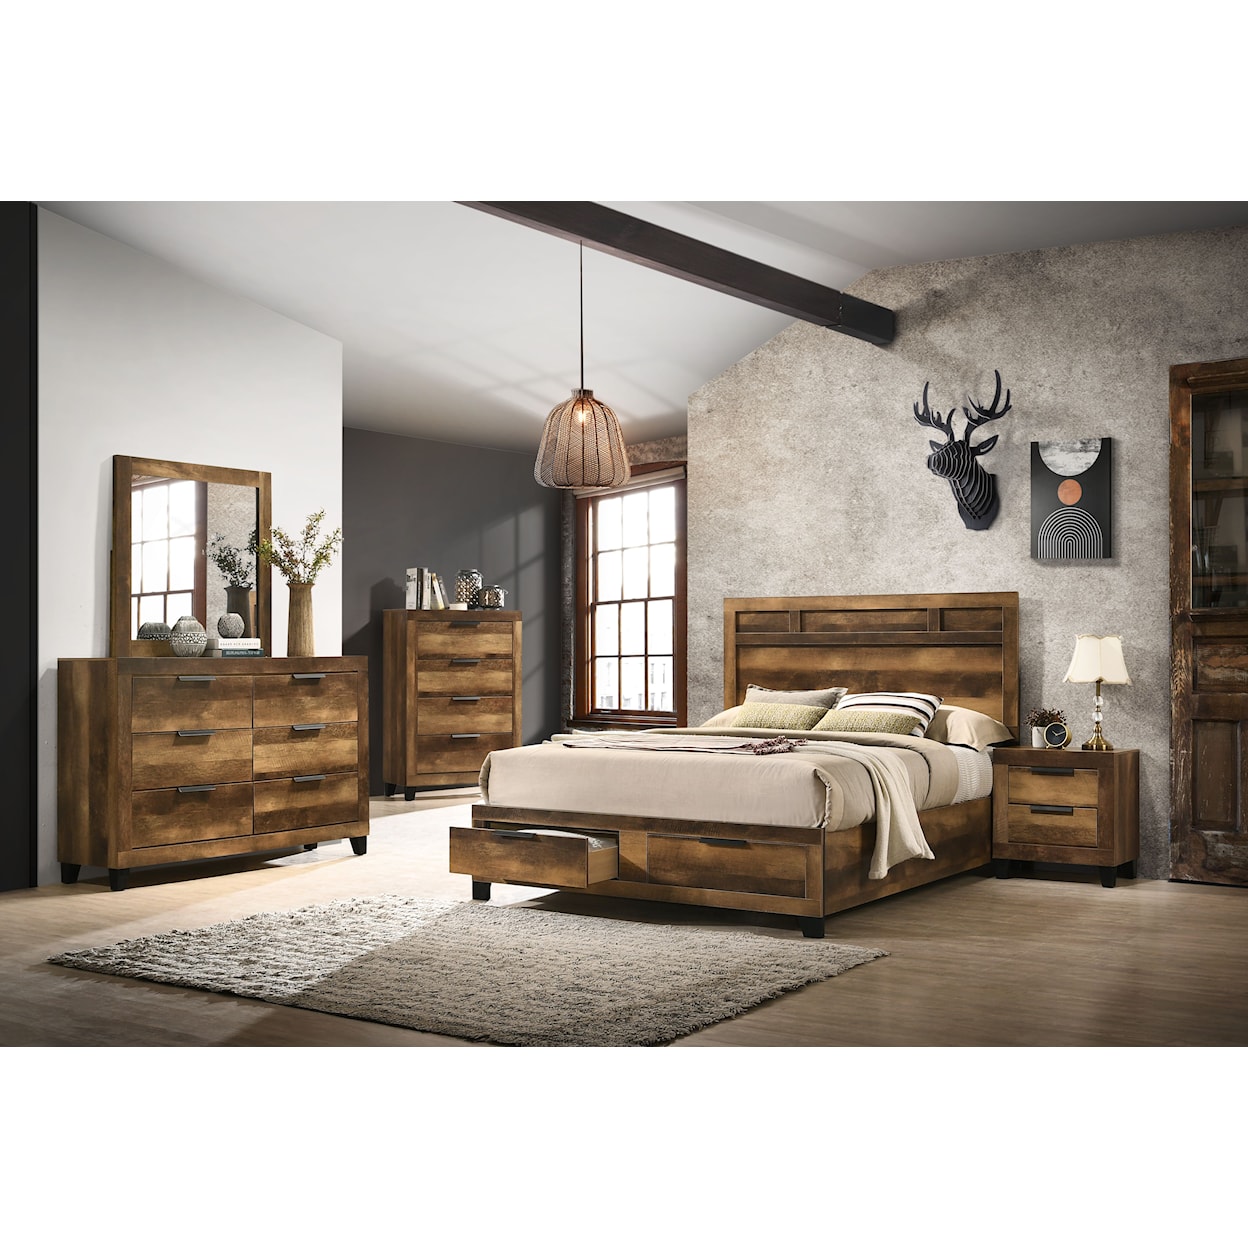 Acme Furniture Morales Queen Bedroom Group